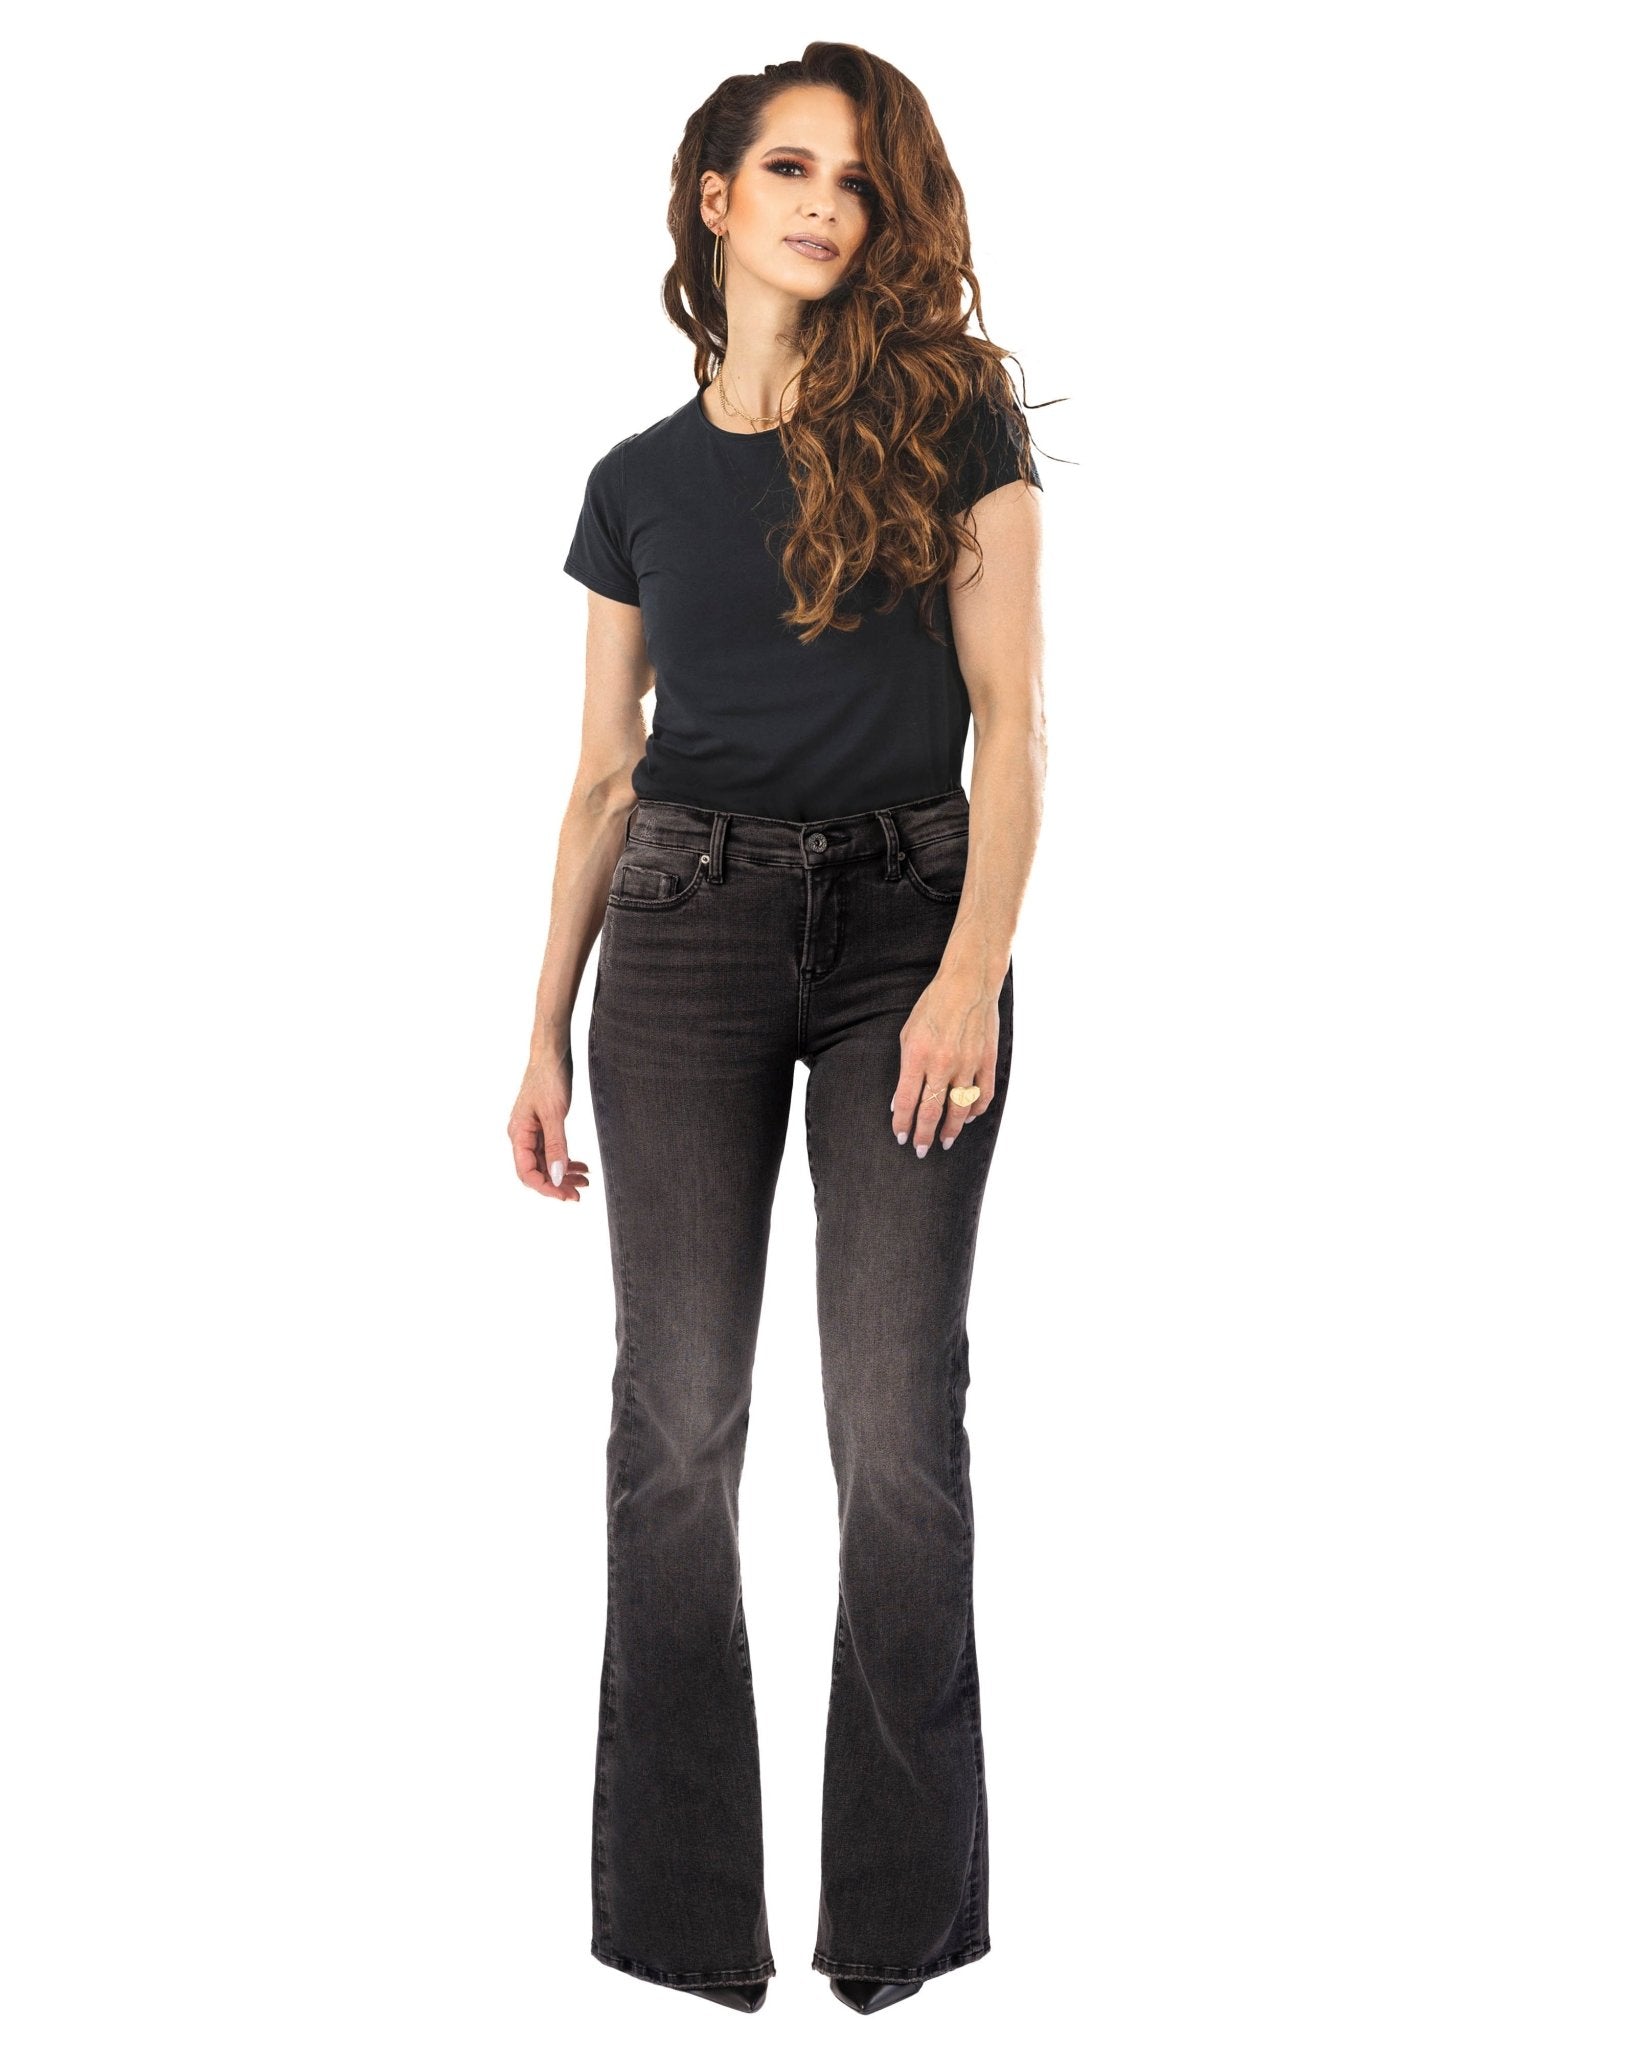 Jean, Stretchy Denim, High Rose Nancy – Jeans Waist